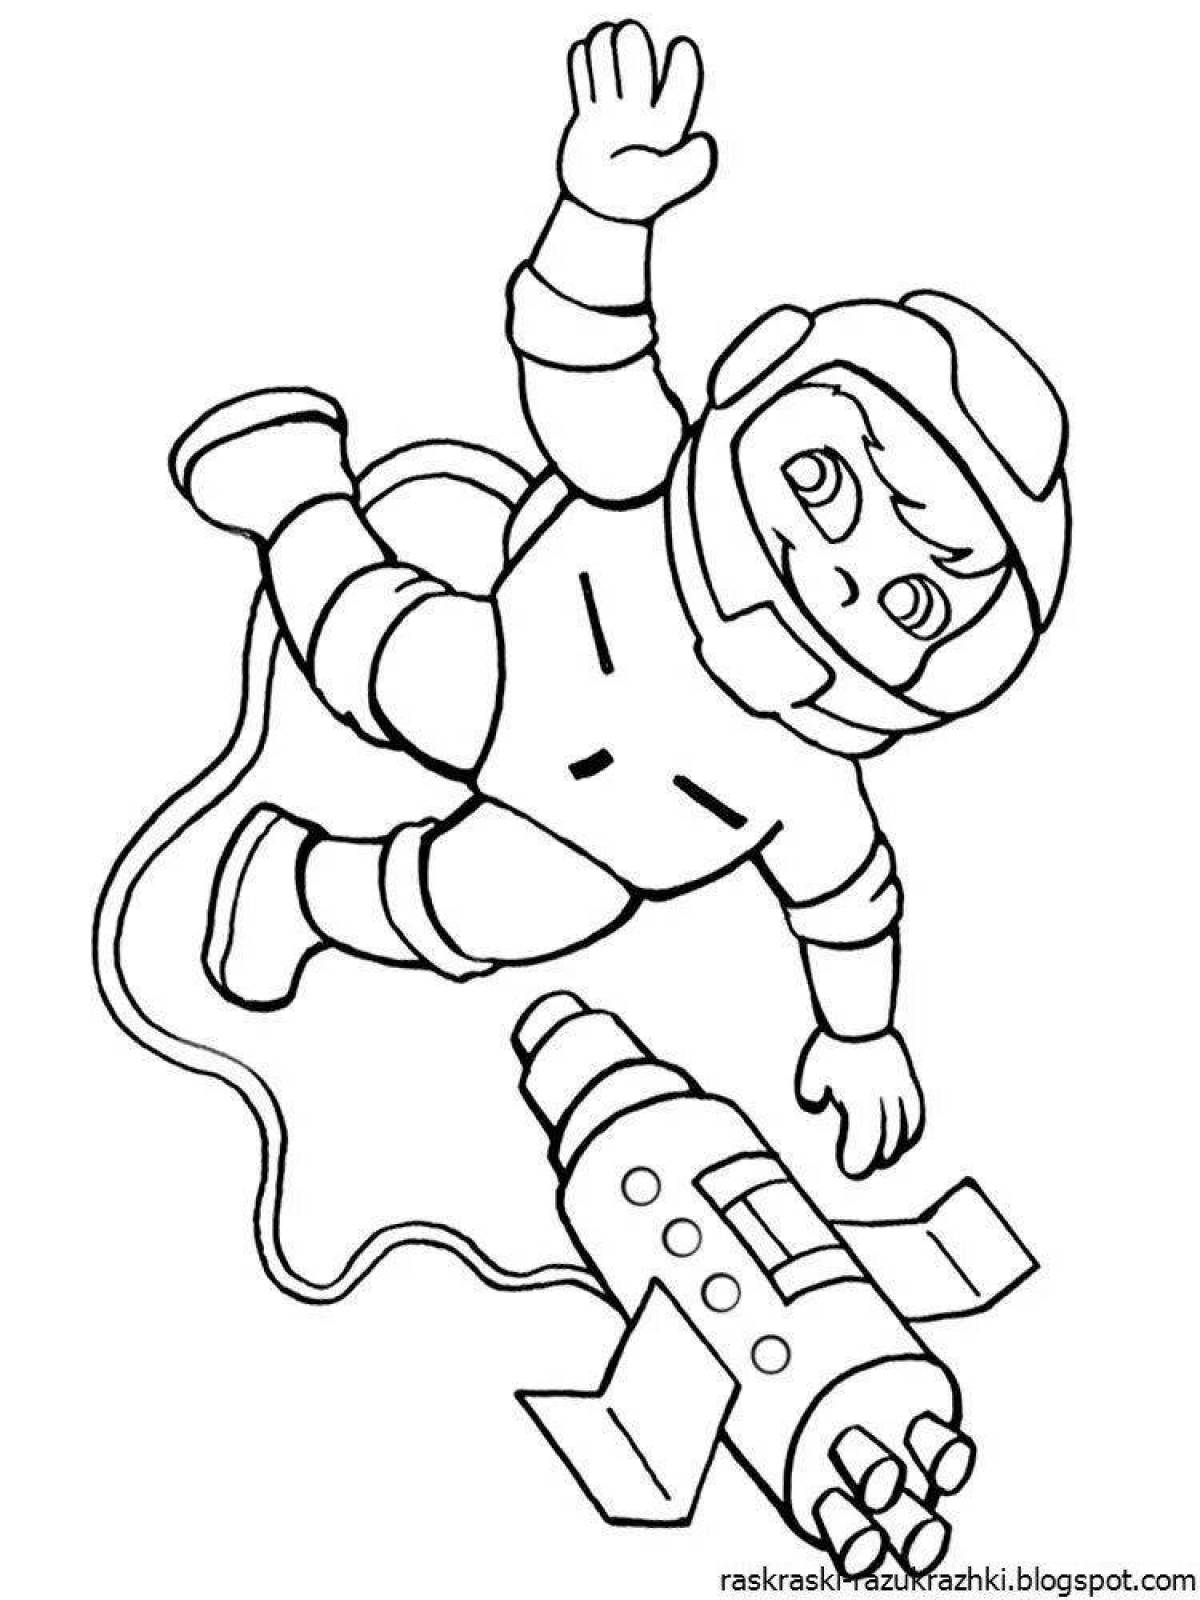 Cosmonaut for kids #7